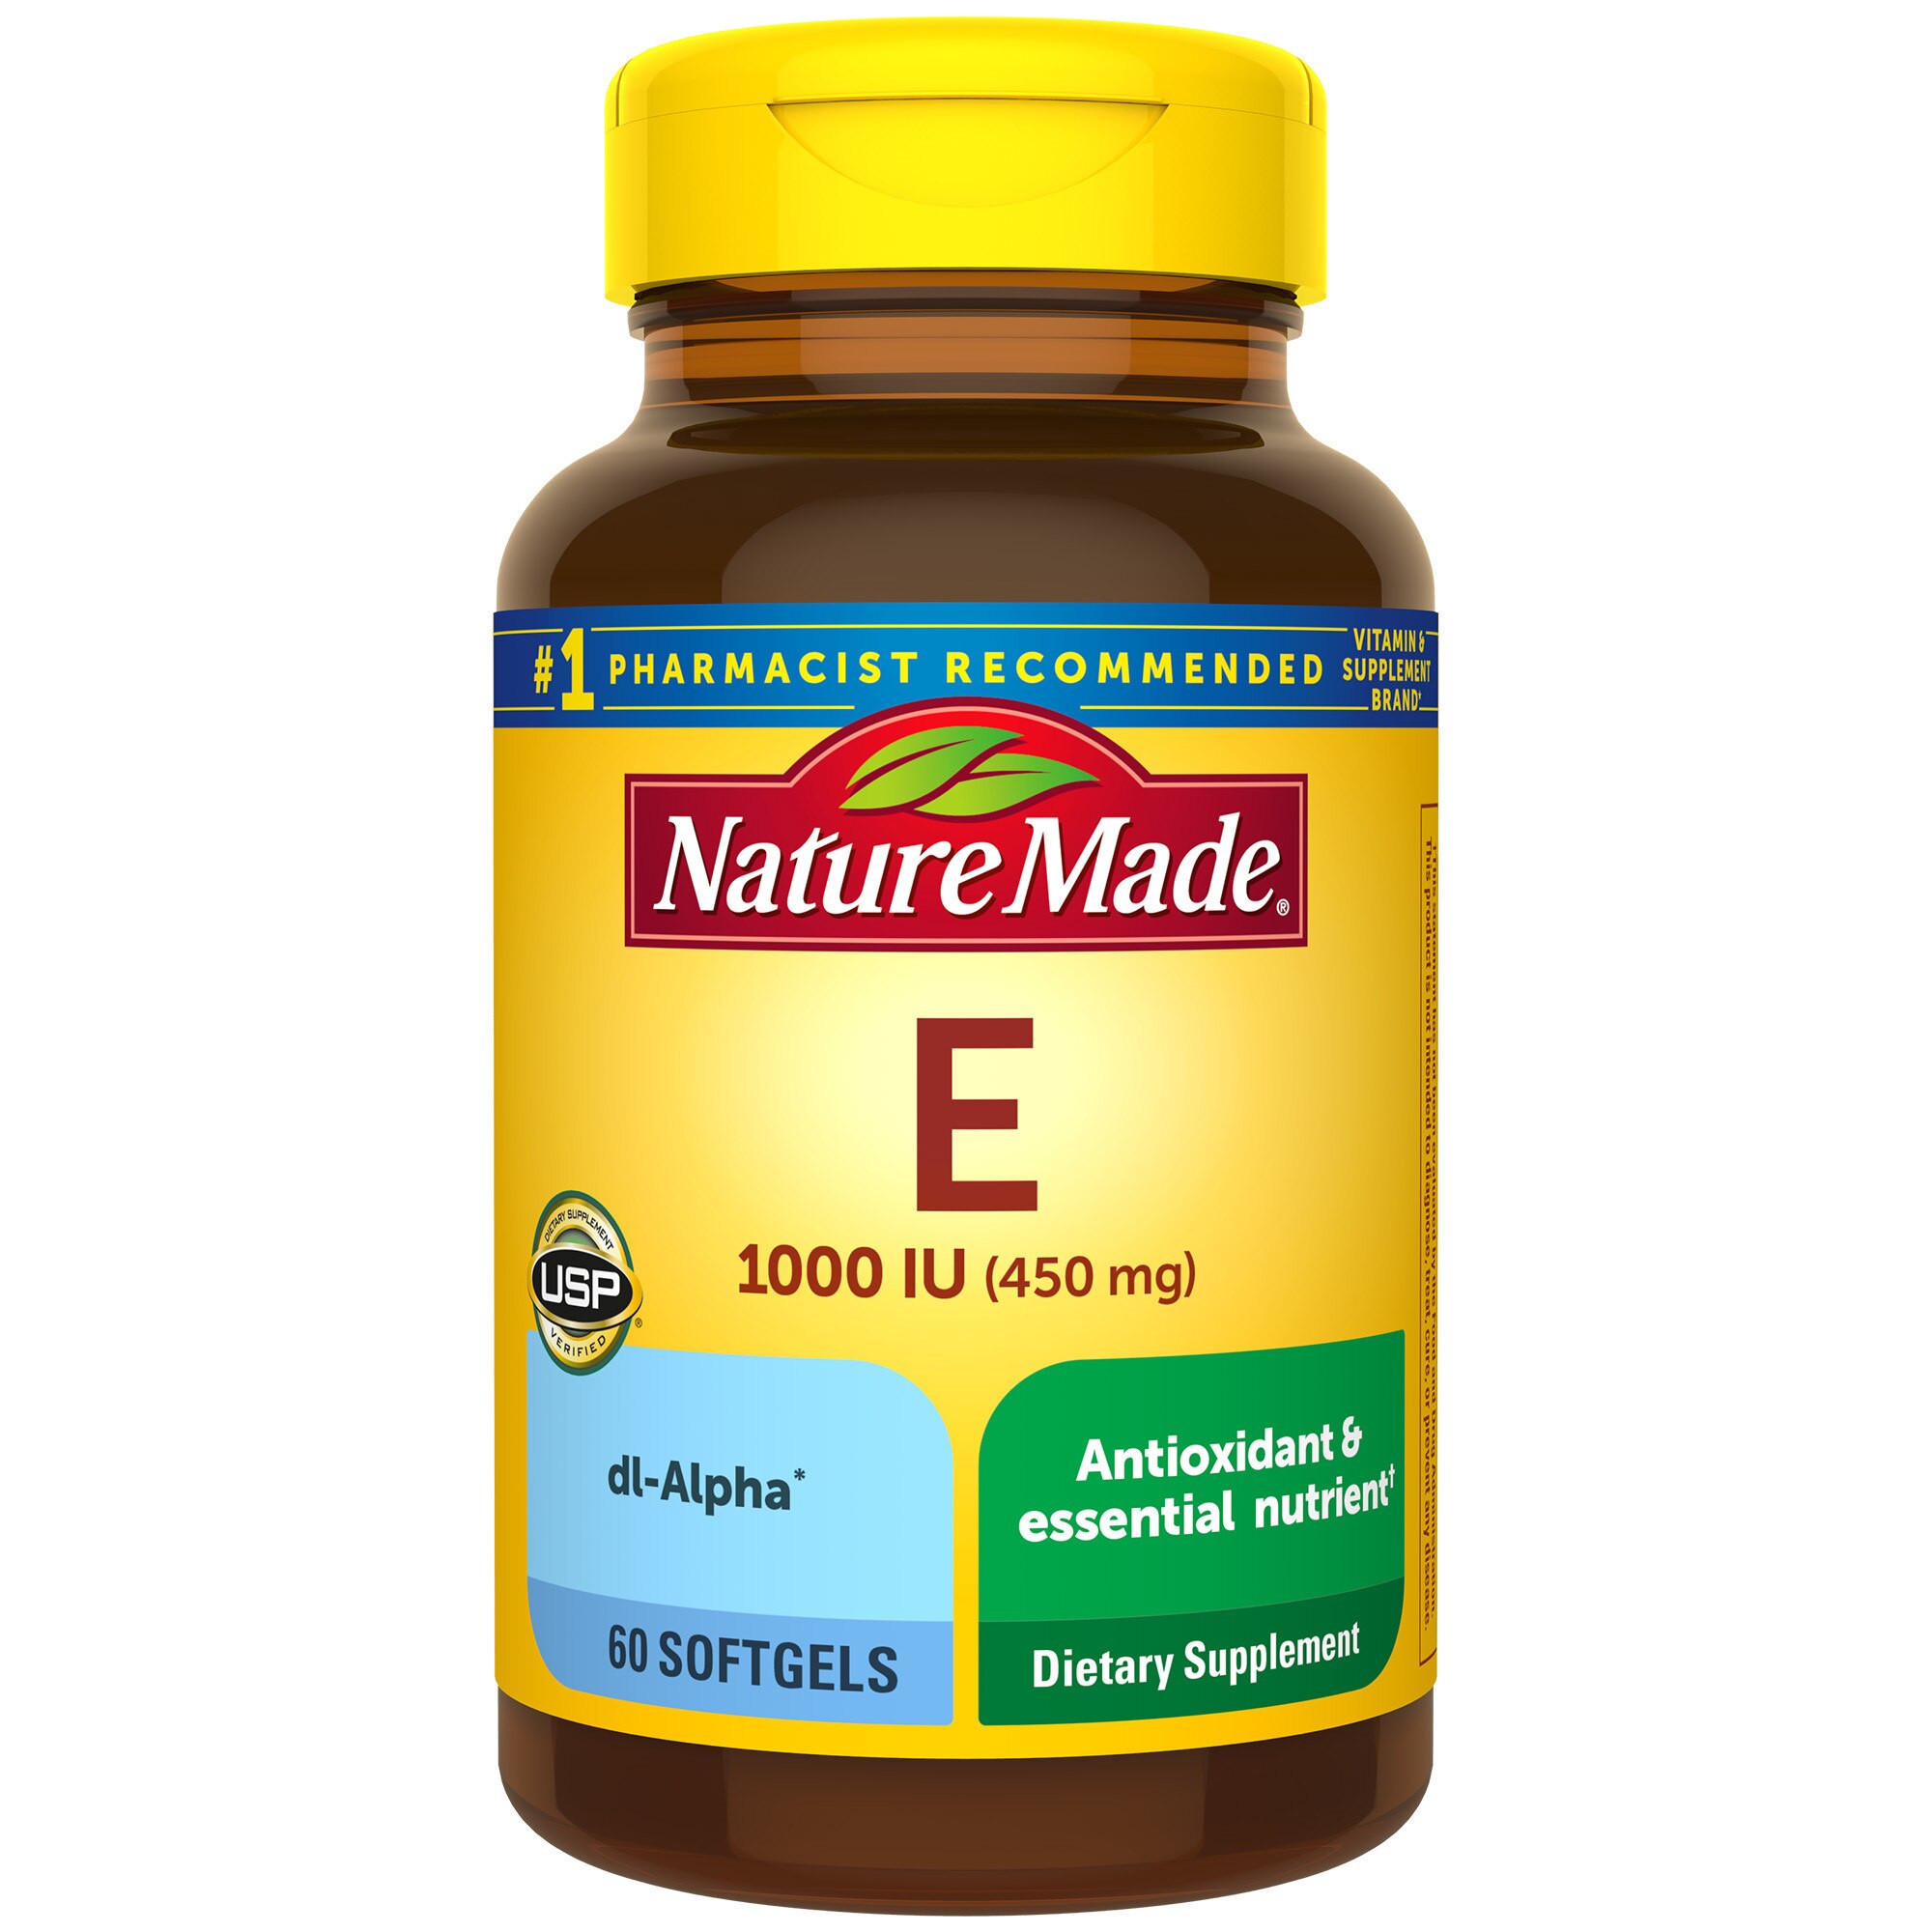 Nature Made Vitamin E 450 mg (1000 IU) dl-Alpha Antioxidant Support Softgels, 60 CT